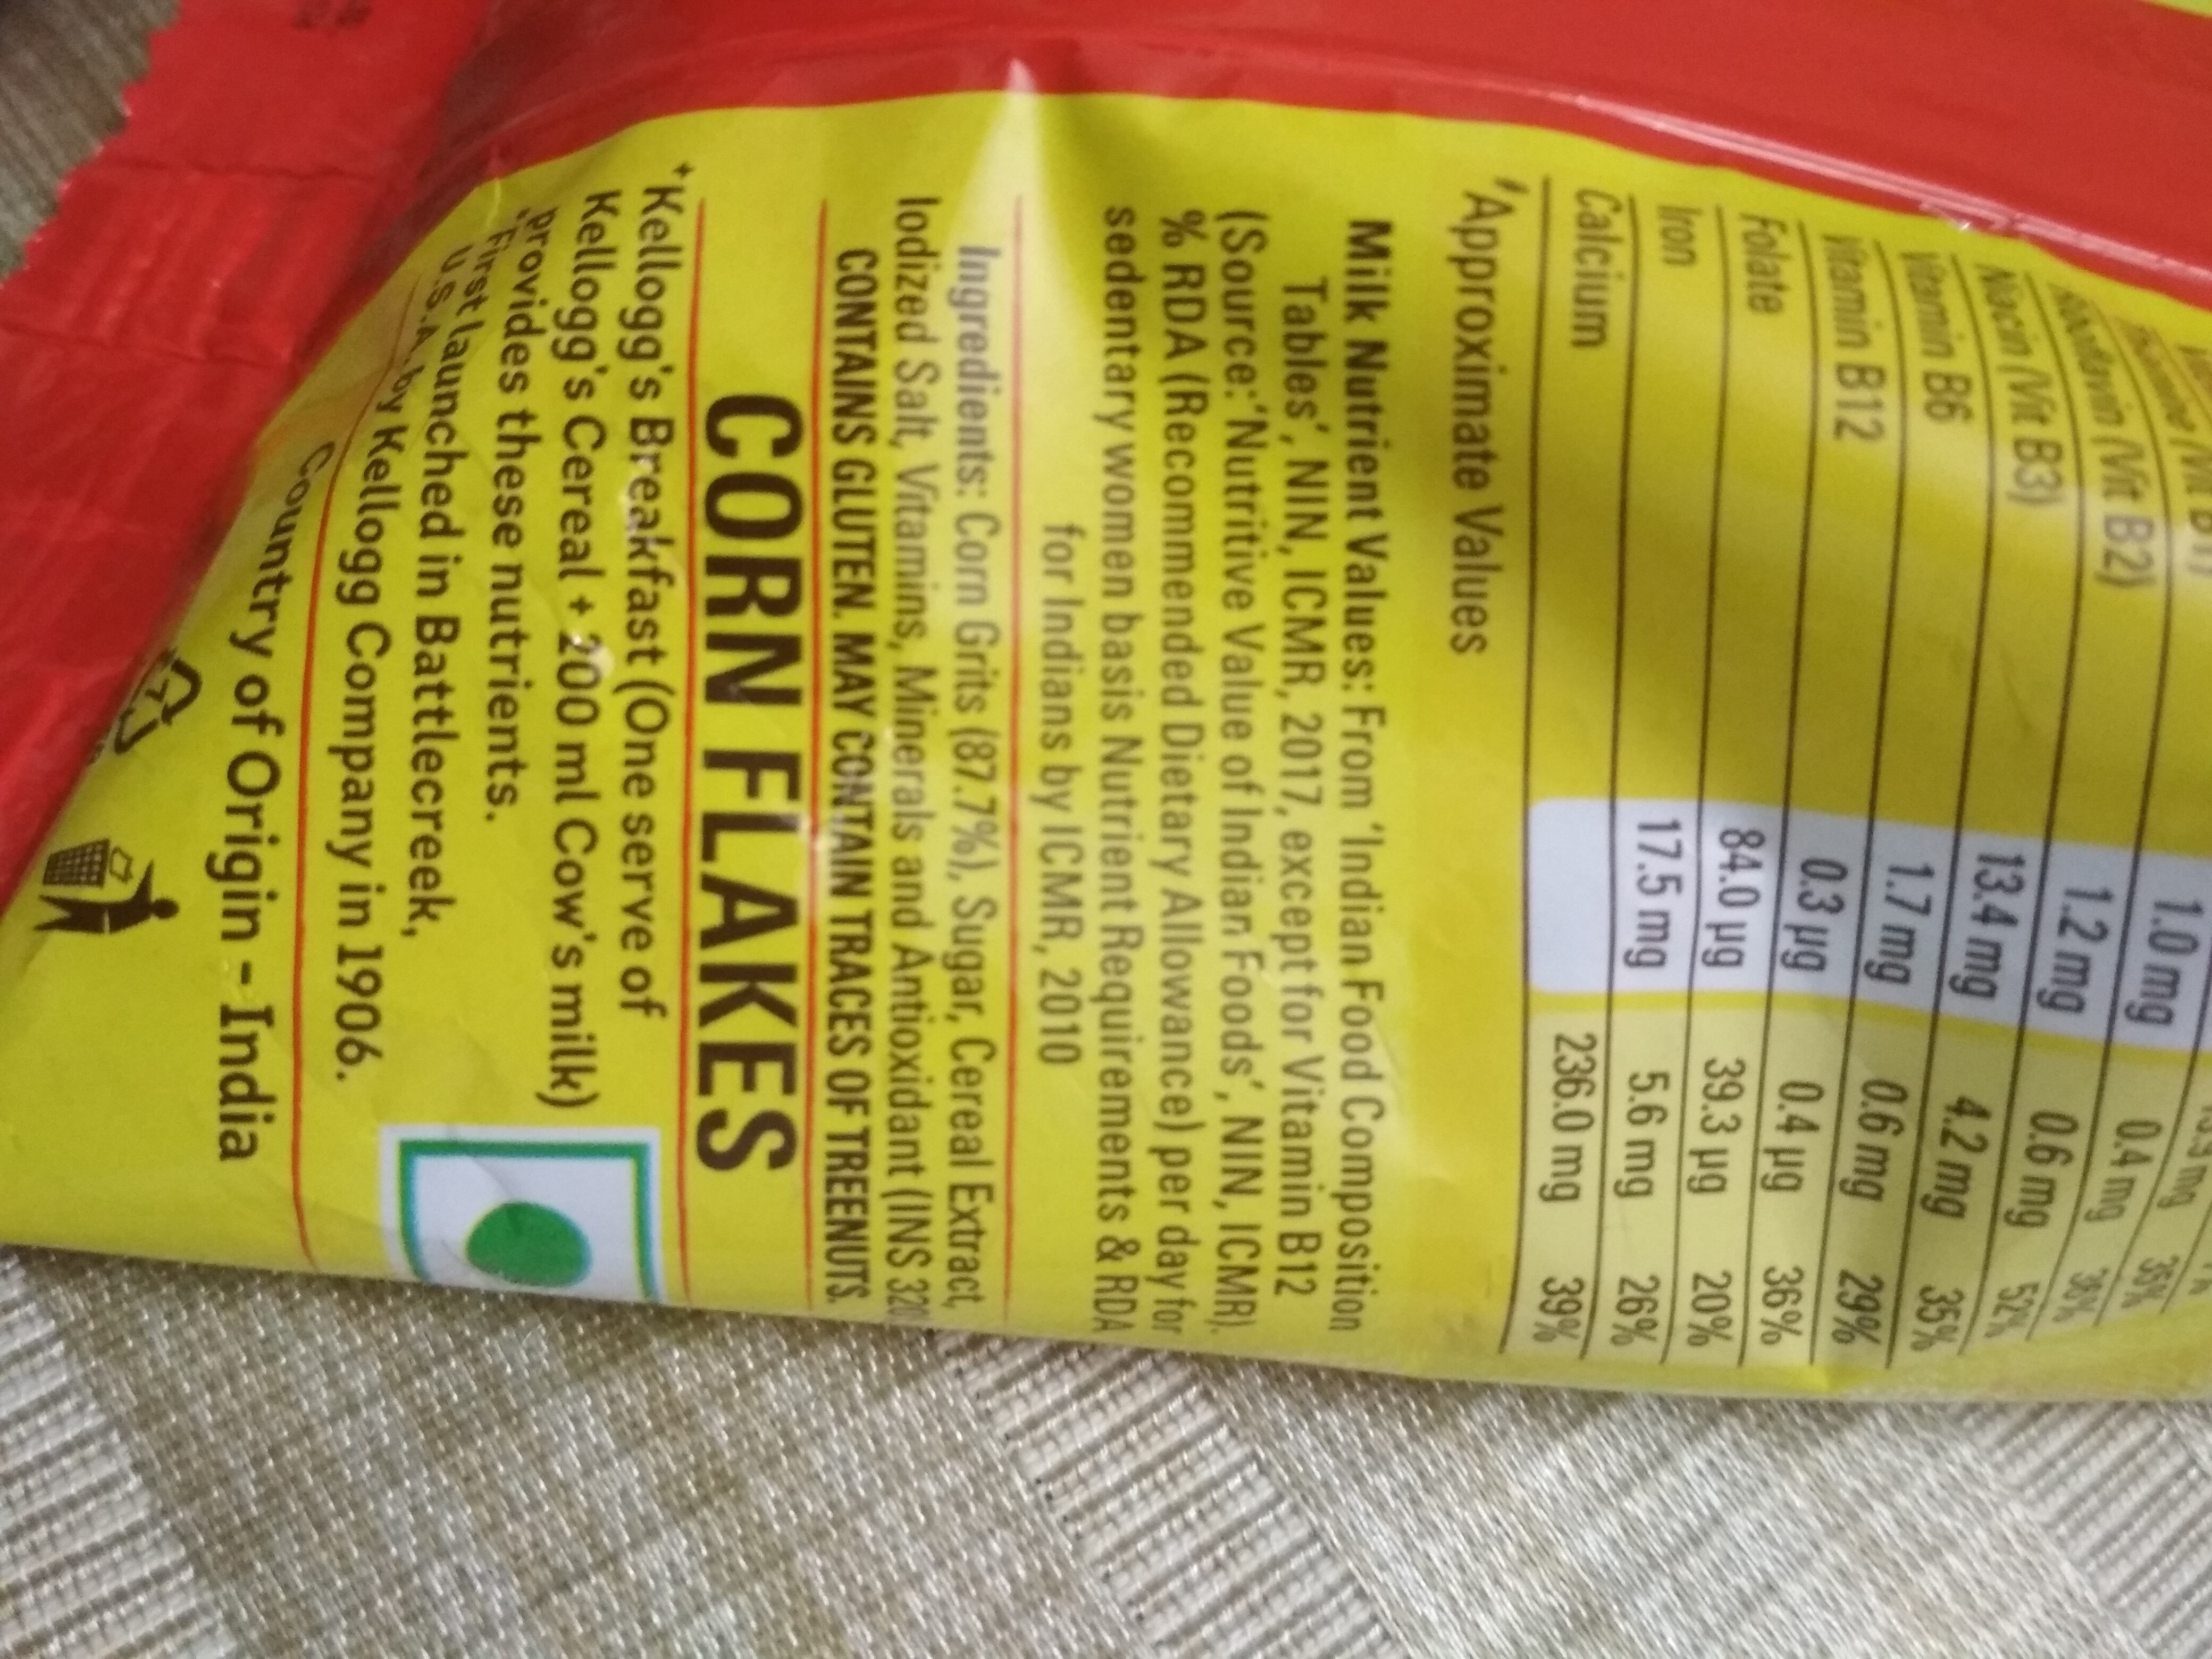 Corn Flakes Original - Ingredients